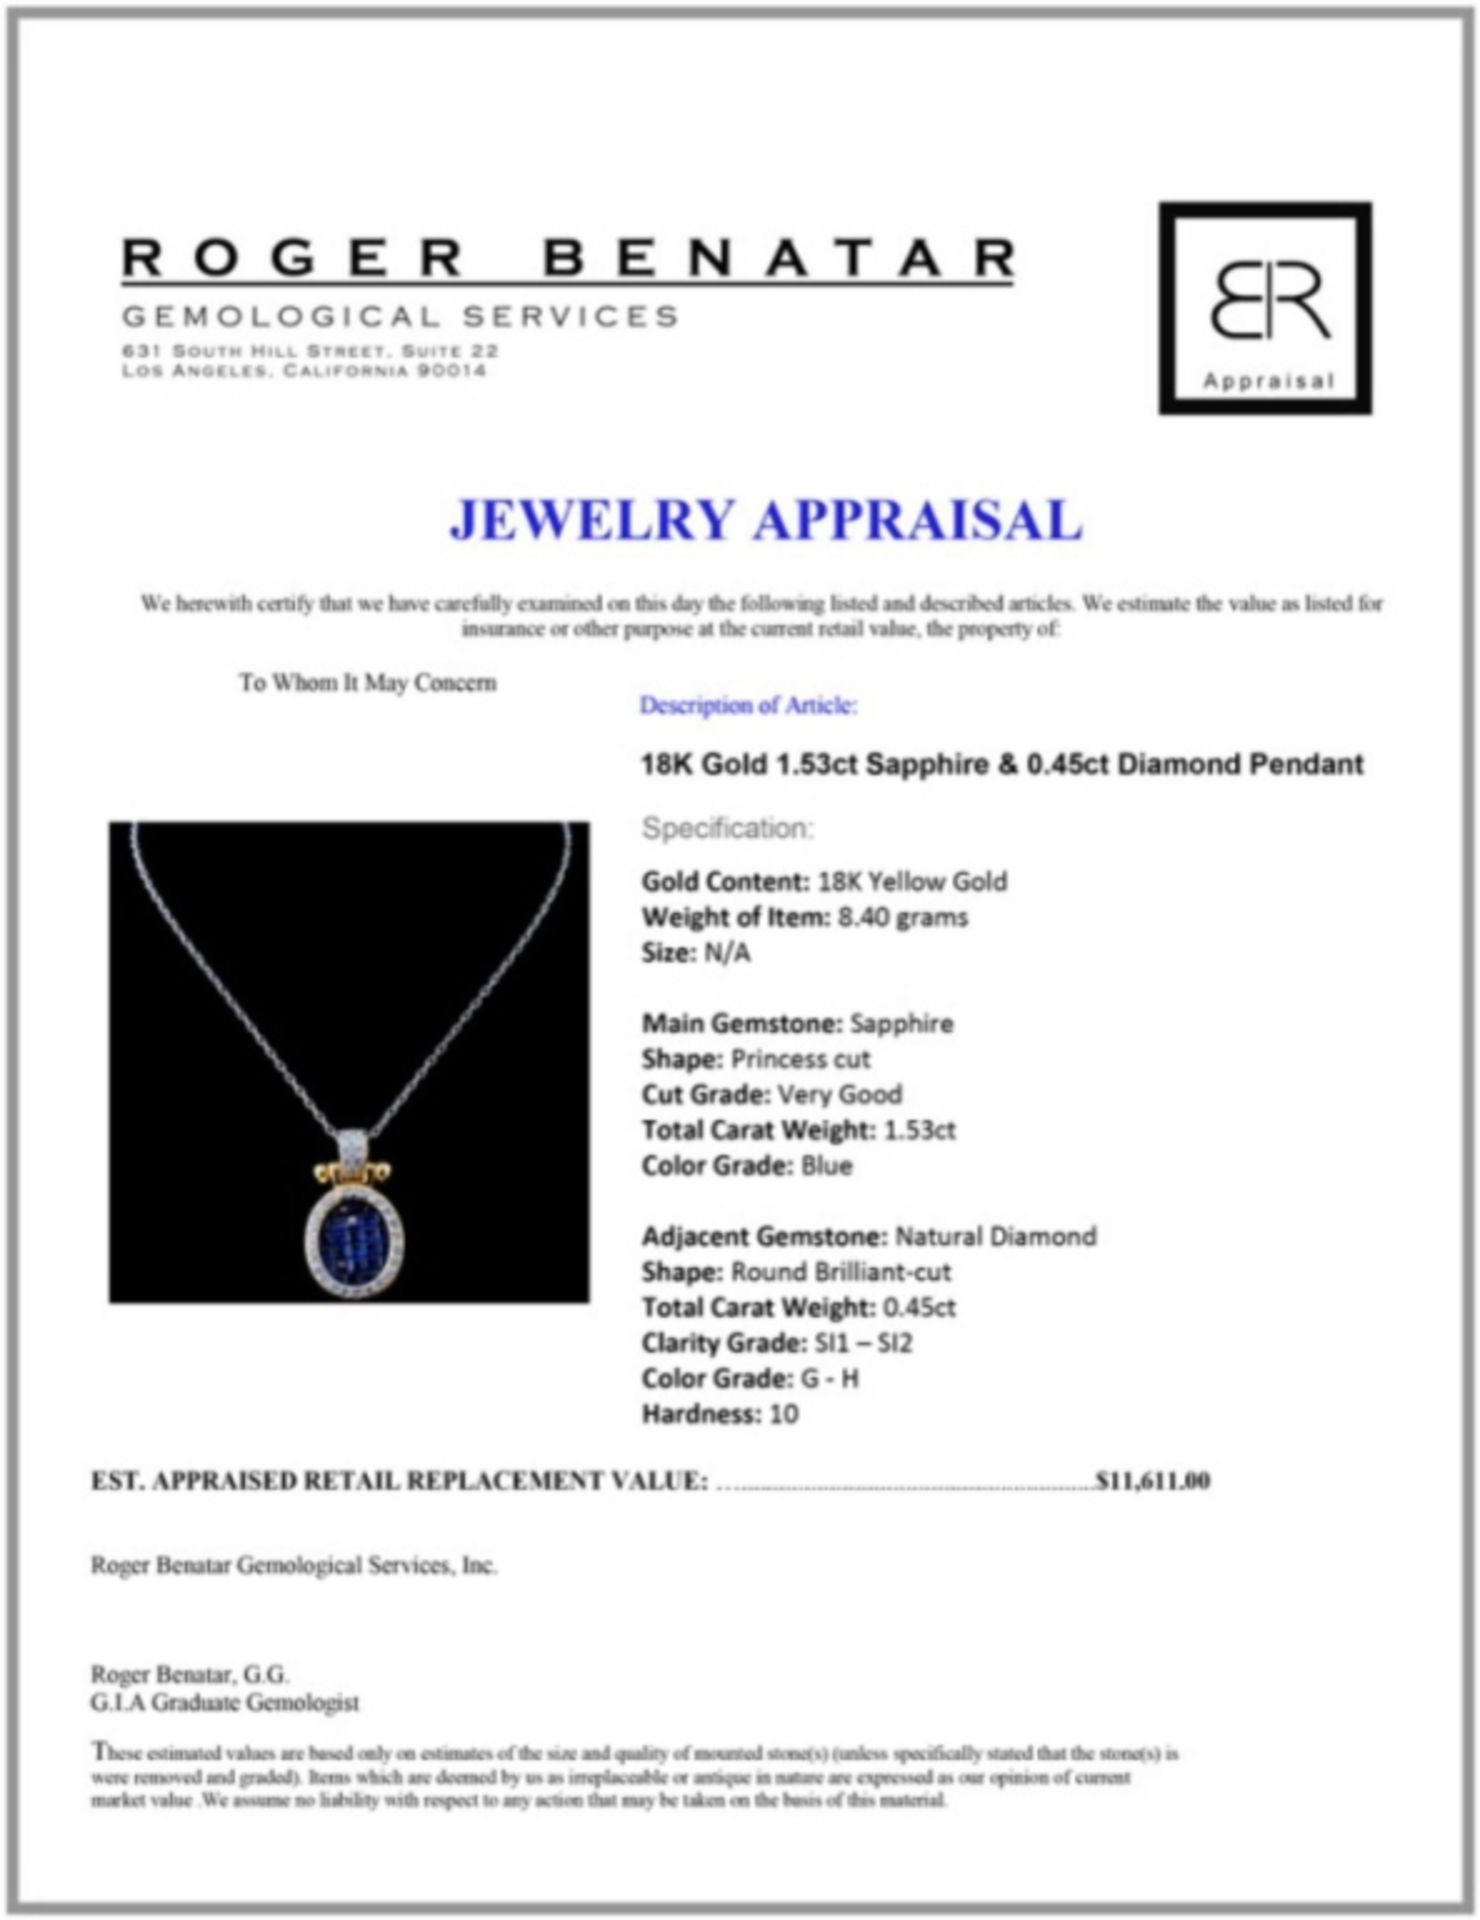 18K Gold 1.53ct Sapphire & 0.45ct Diamond Pendant - Image 3 of 3